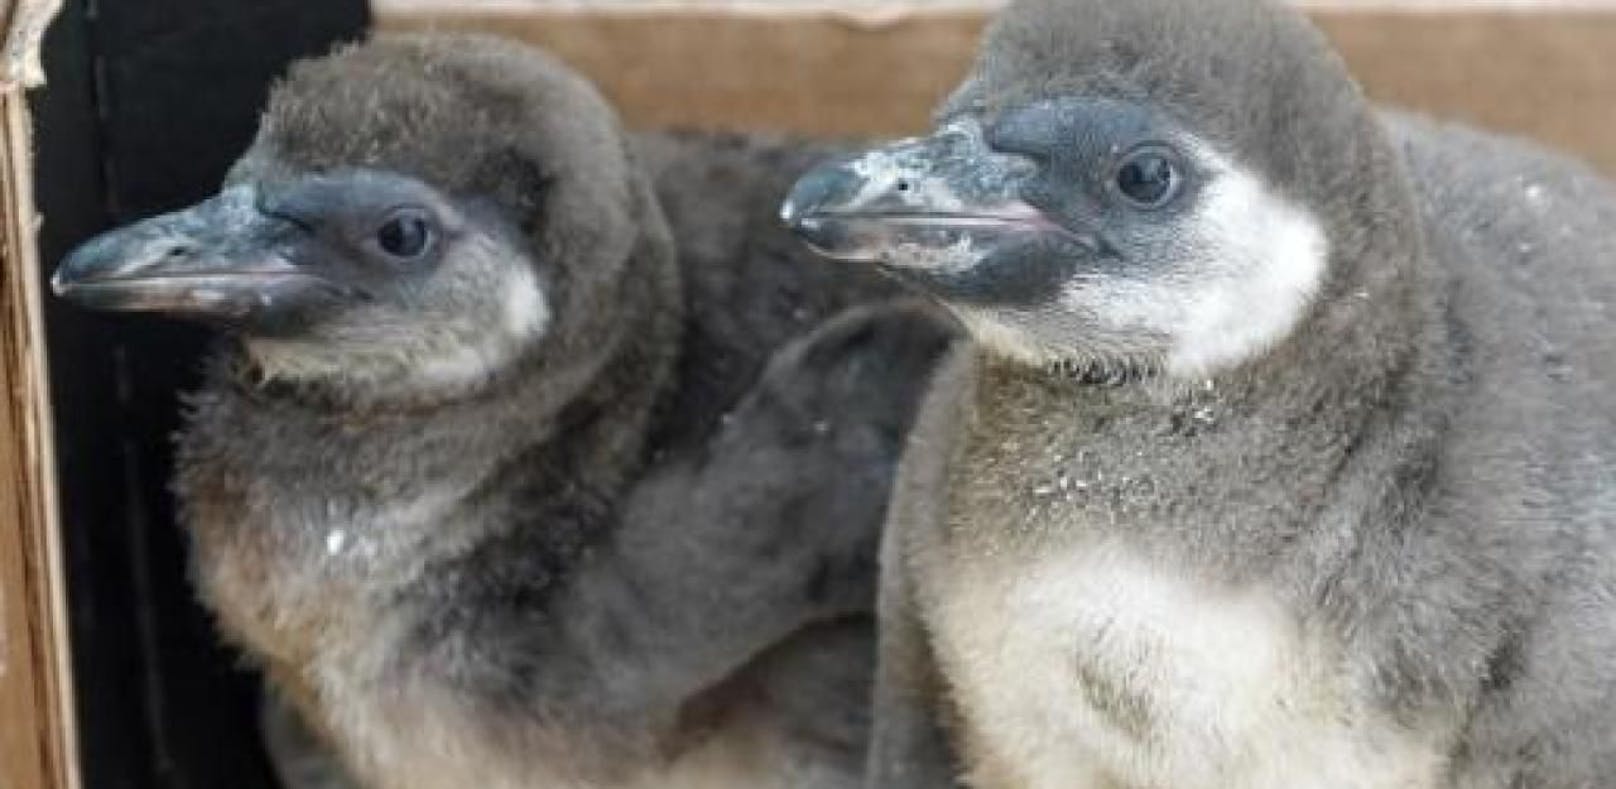 Pinguin-Drama in Zoo endet tödlich